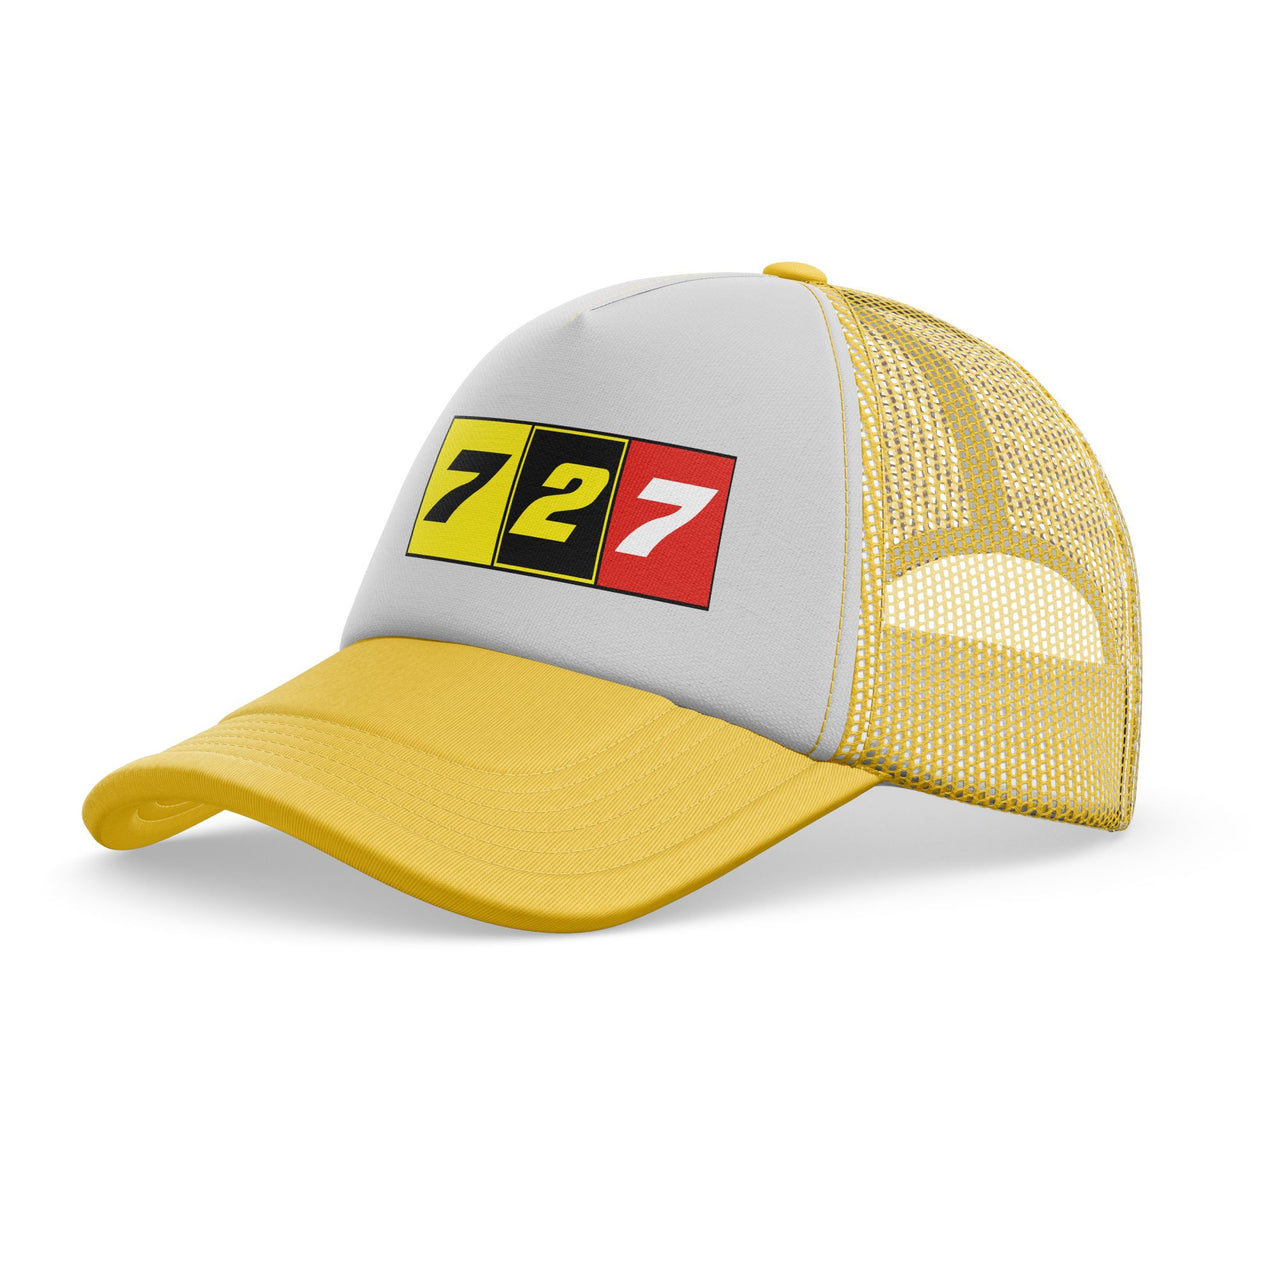 Flat Colourful 727 Designed Trucker Caps & Hats